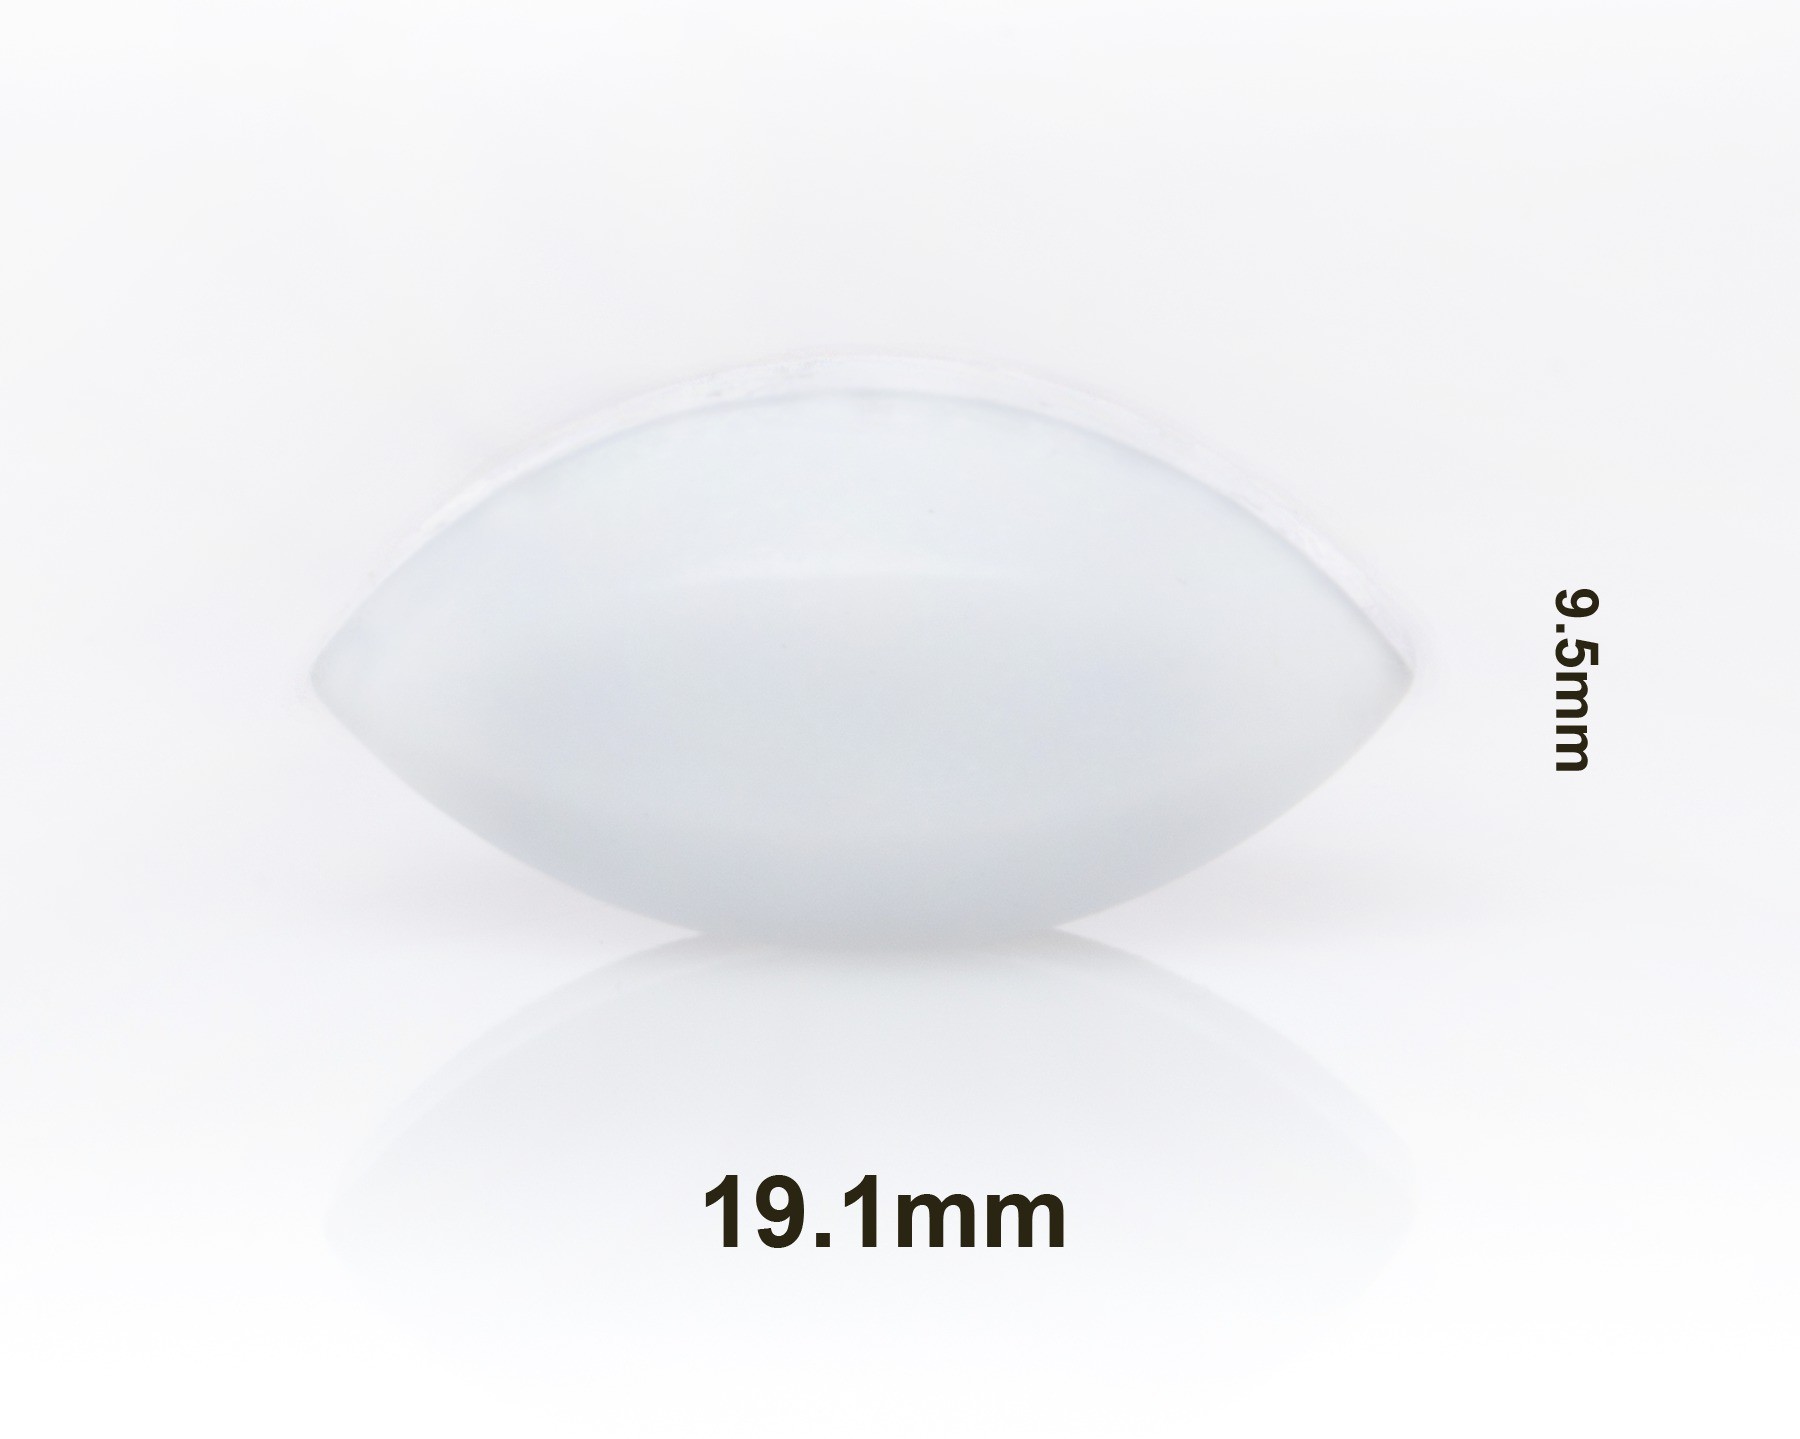 SP Bel-Art Spinbar Teflon Elliptical (Egg-Shaped) Magnetic Stirring Bar; 19.1 x 9.5mm, White